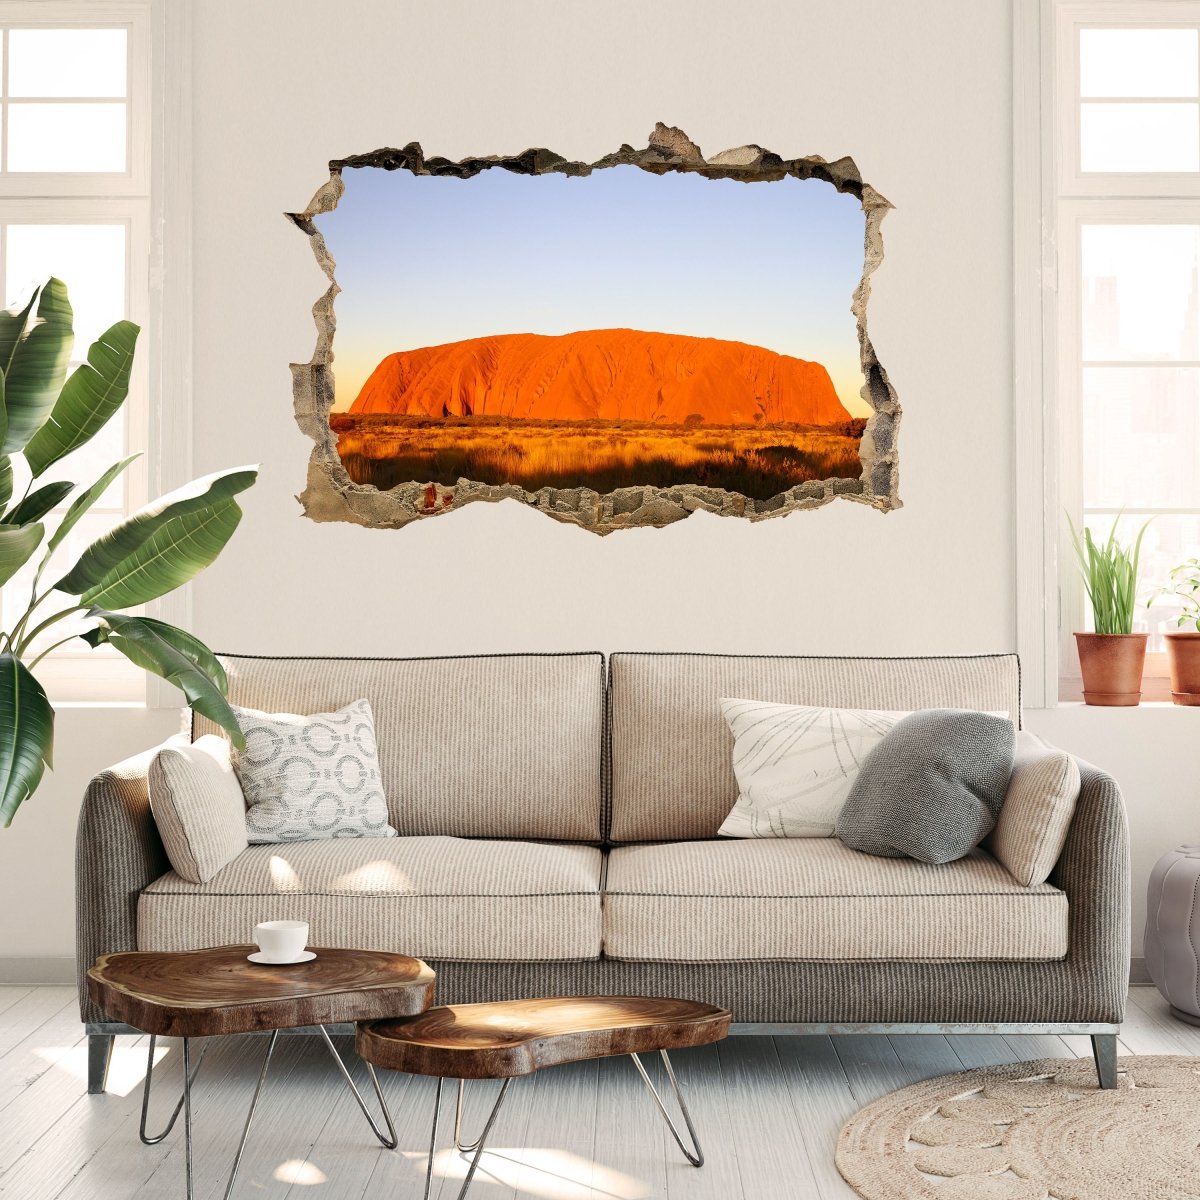 Ayers Rock Sunset Nature 3D Wall Sticker - Wall Decal M0205